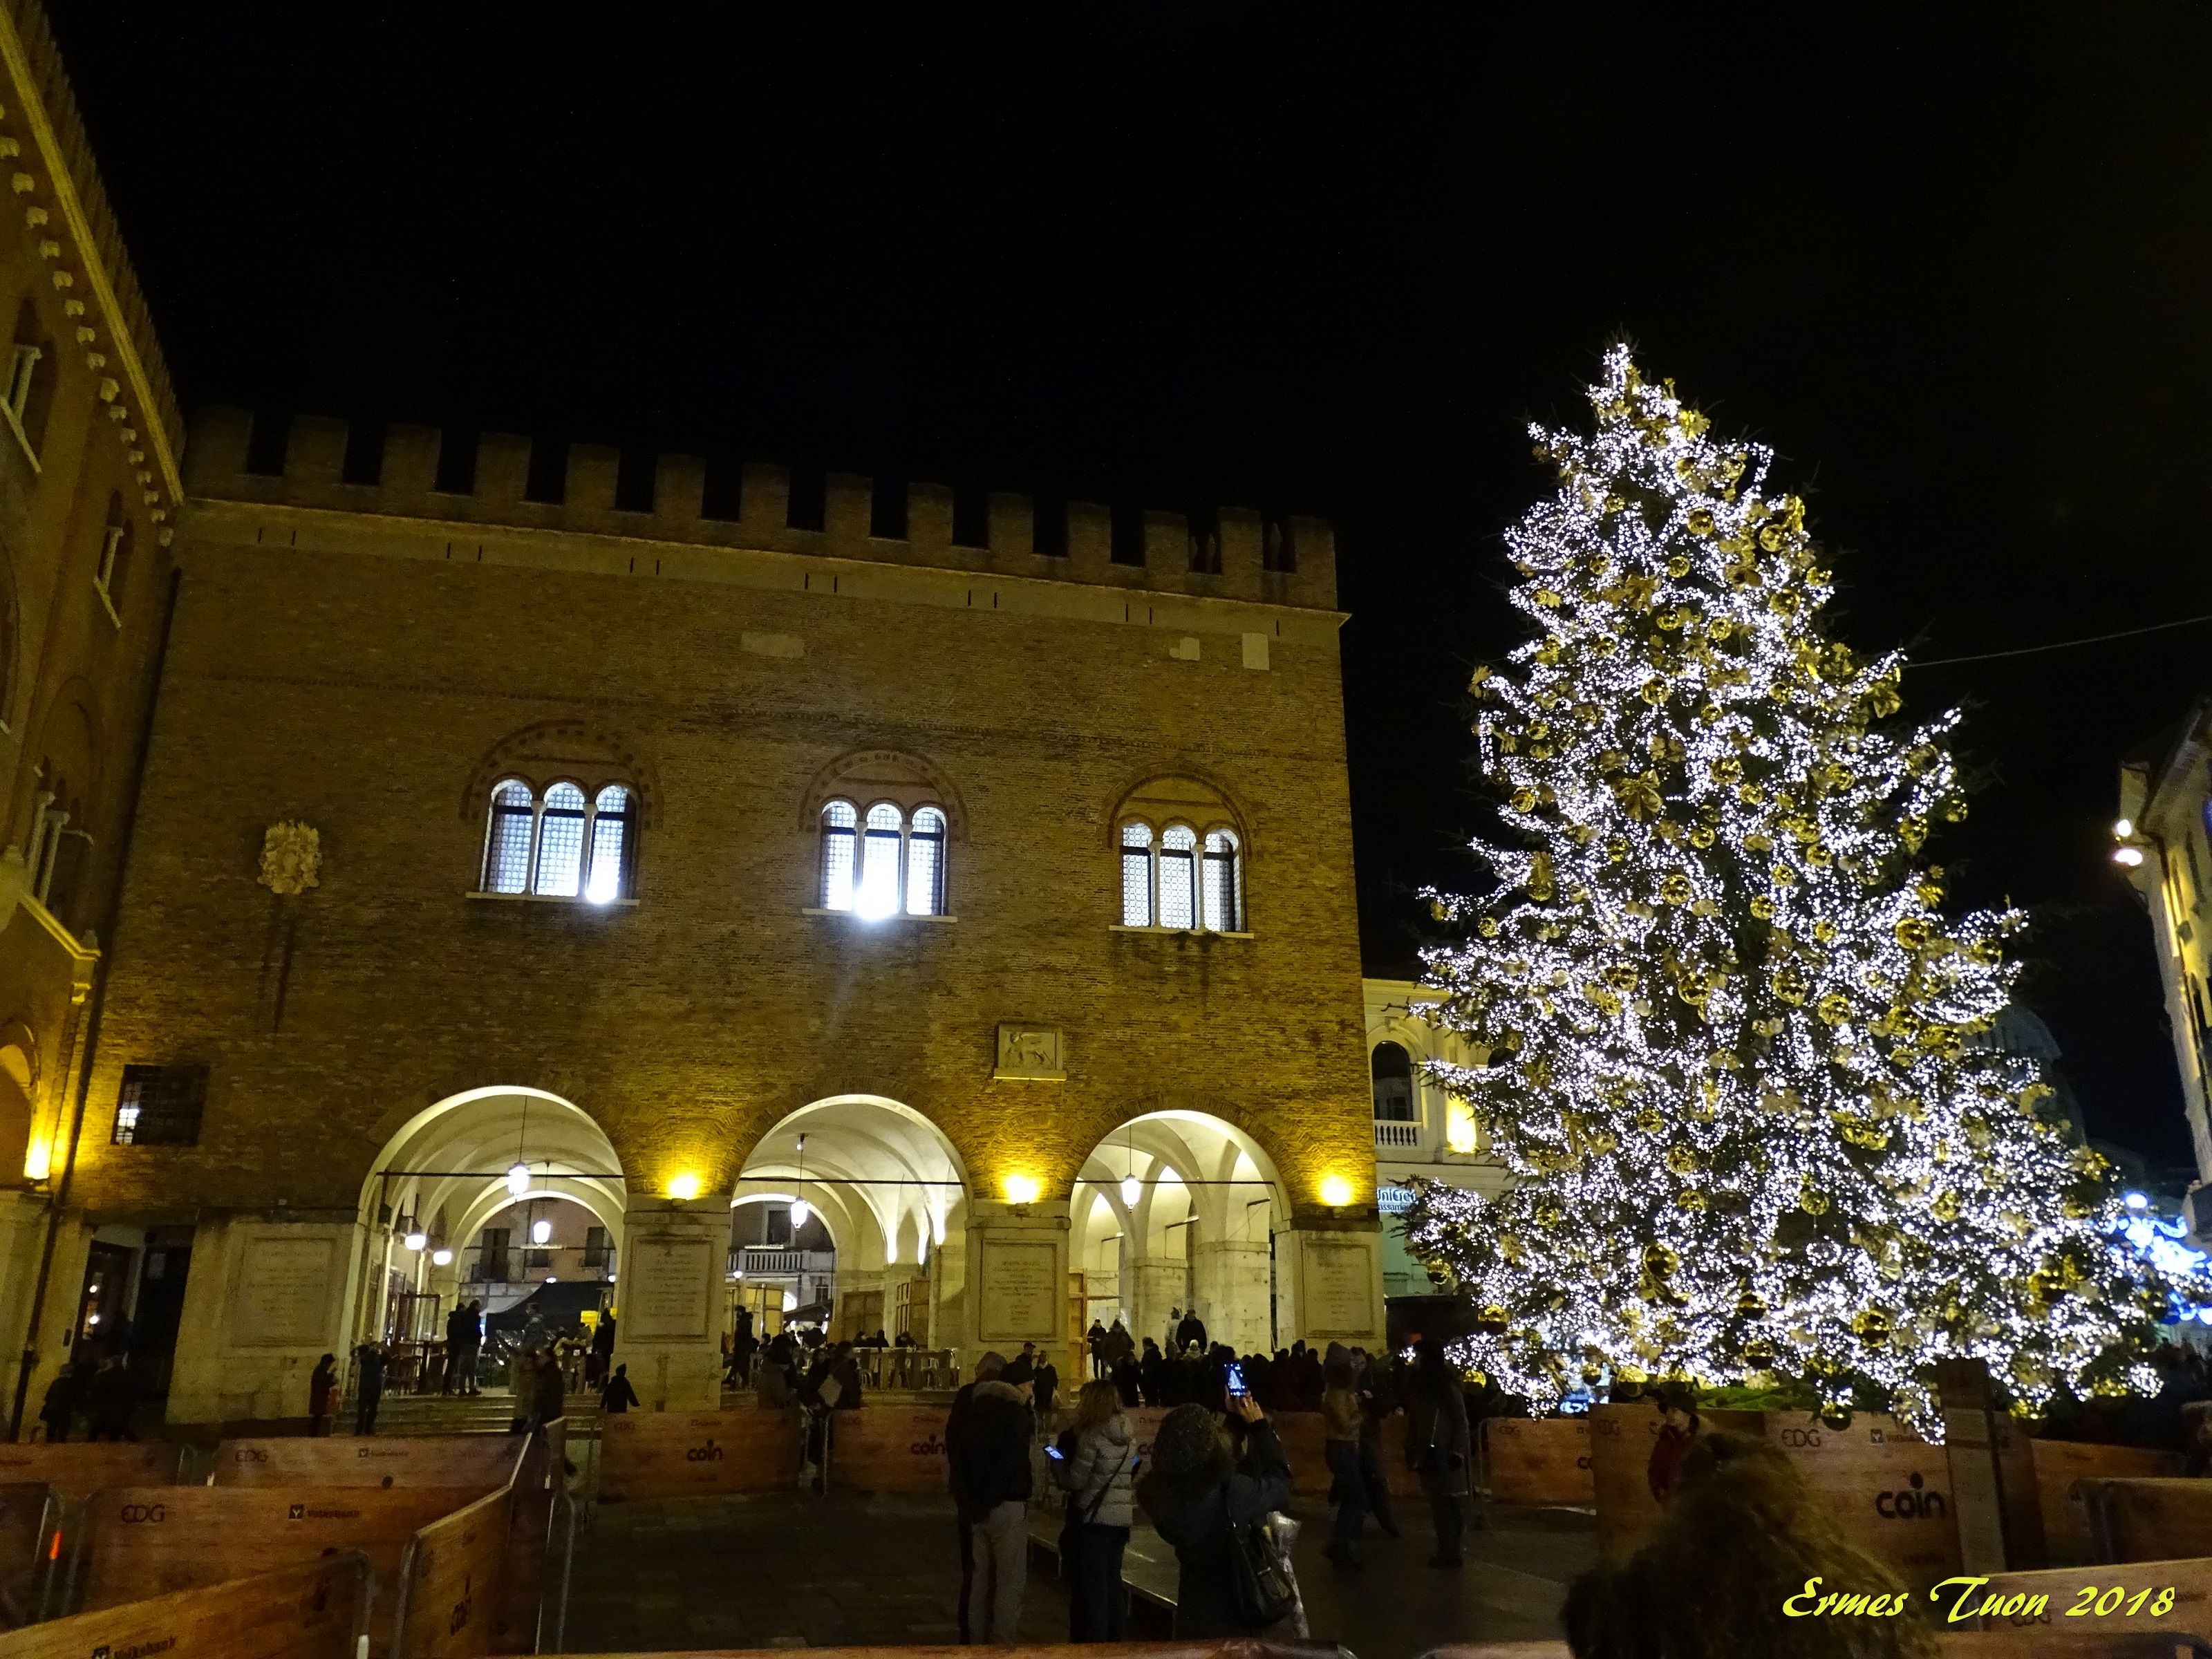 Caption: A Christmas Tree in Piazza dei Signori (Square of the Lords)  - Treviso